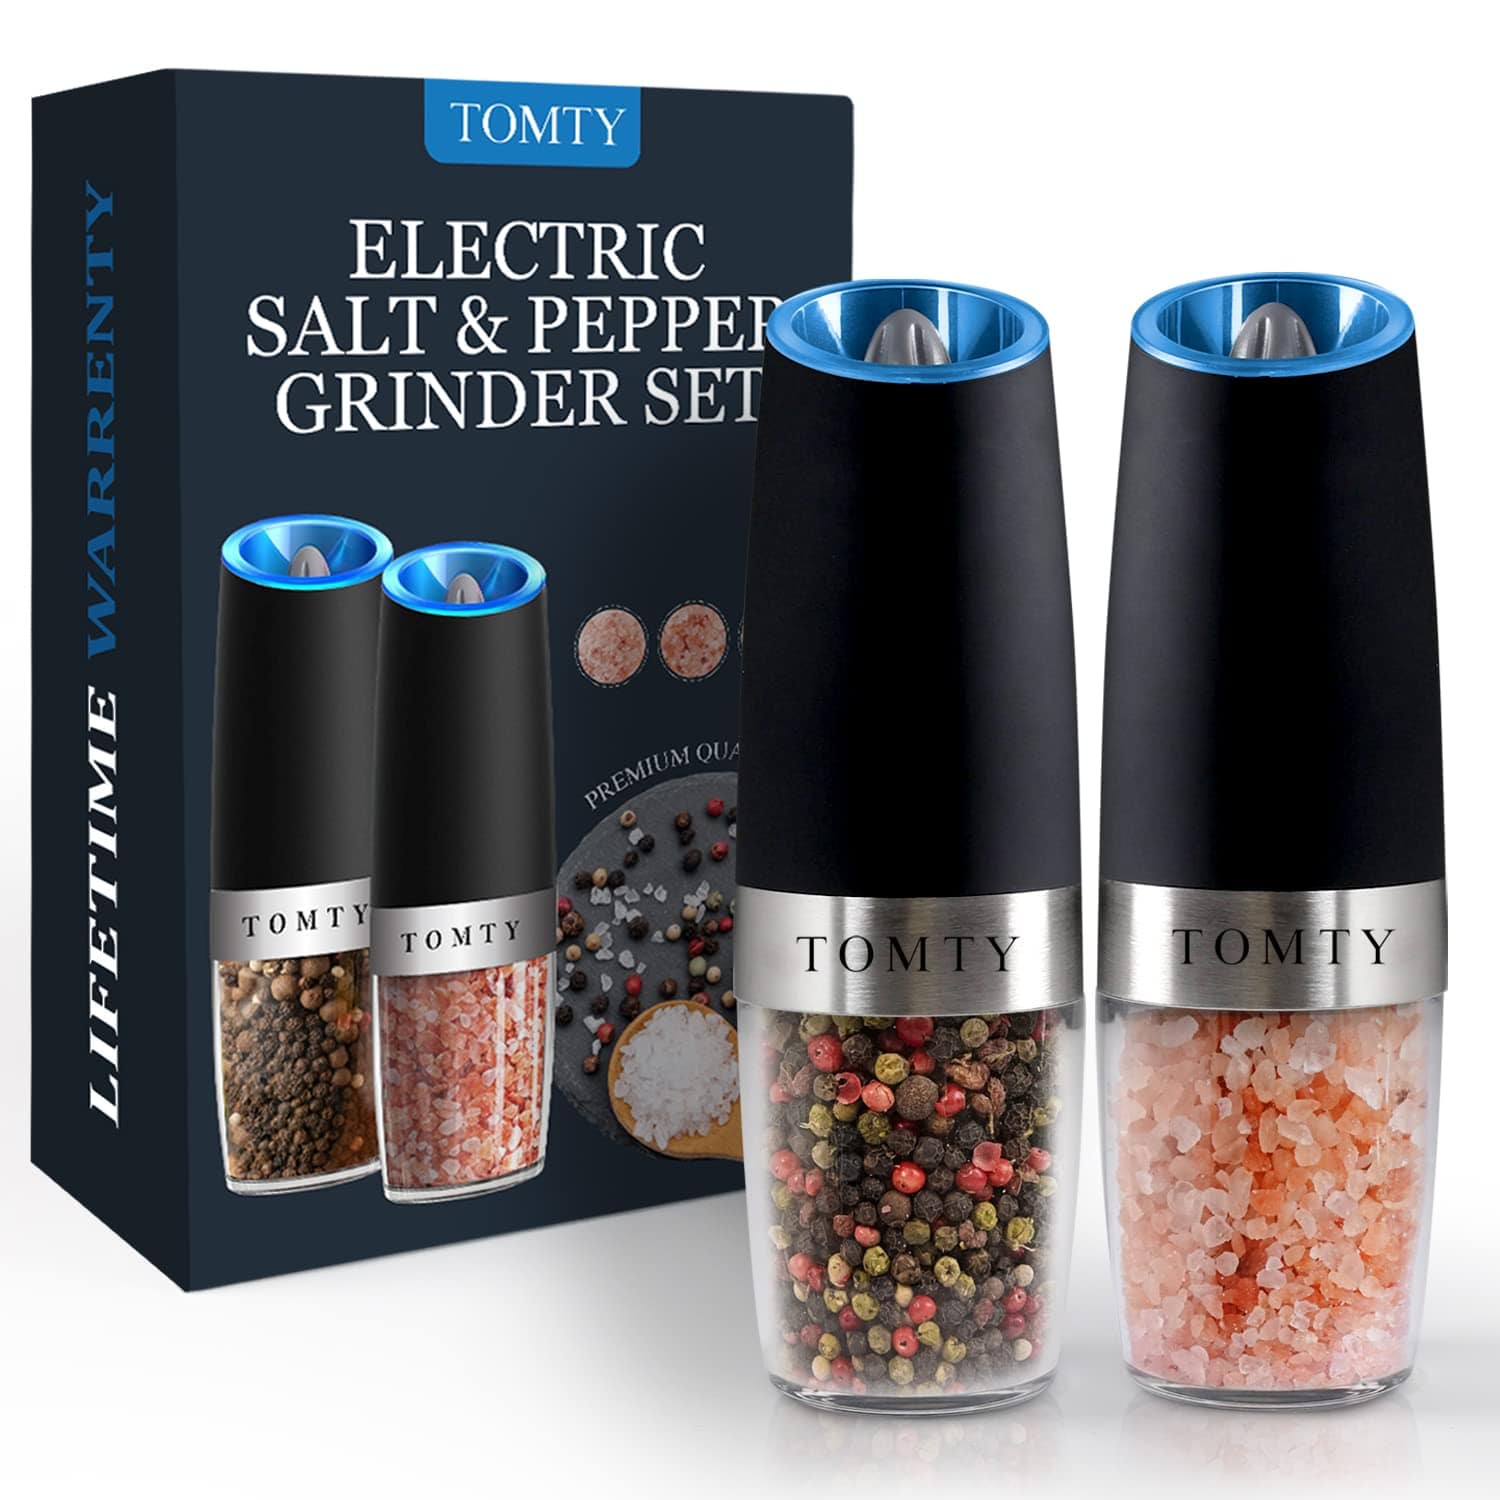 Salt or pepper mill GIVA, electric with tilt sensor – Gourmet